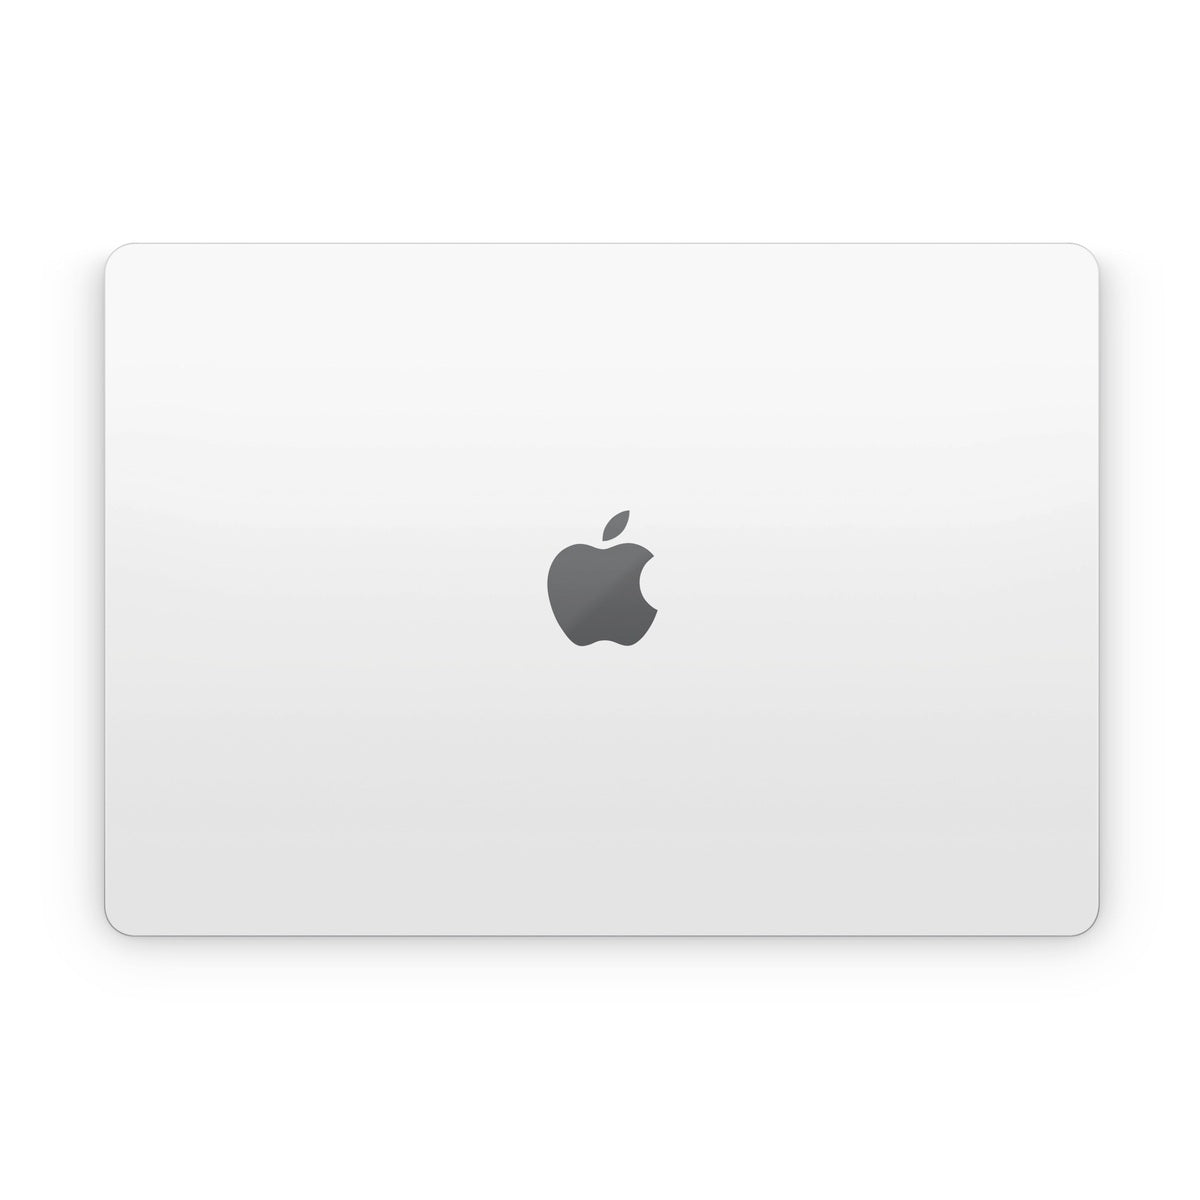 Solid State White - Apple MacBook Skin